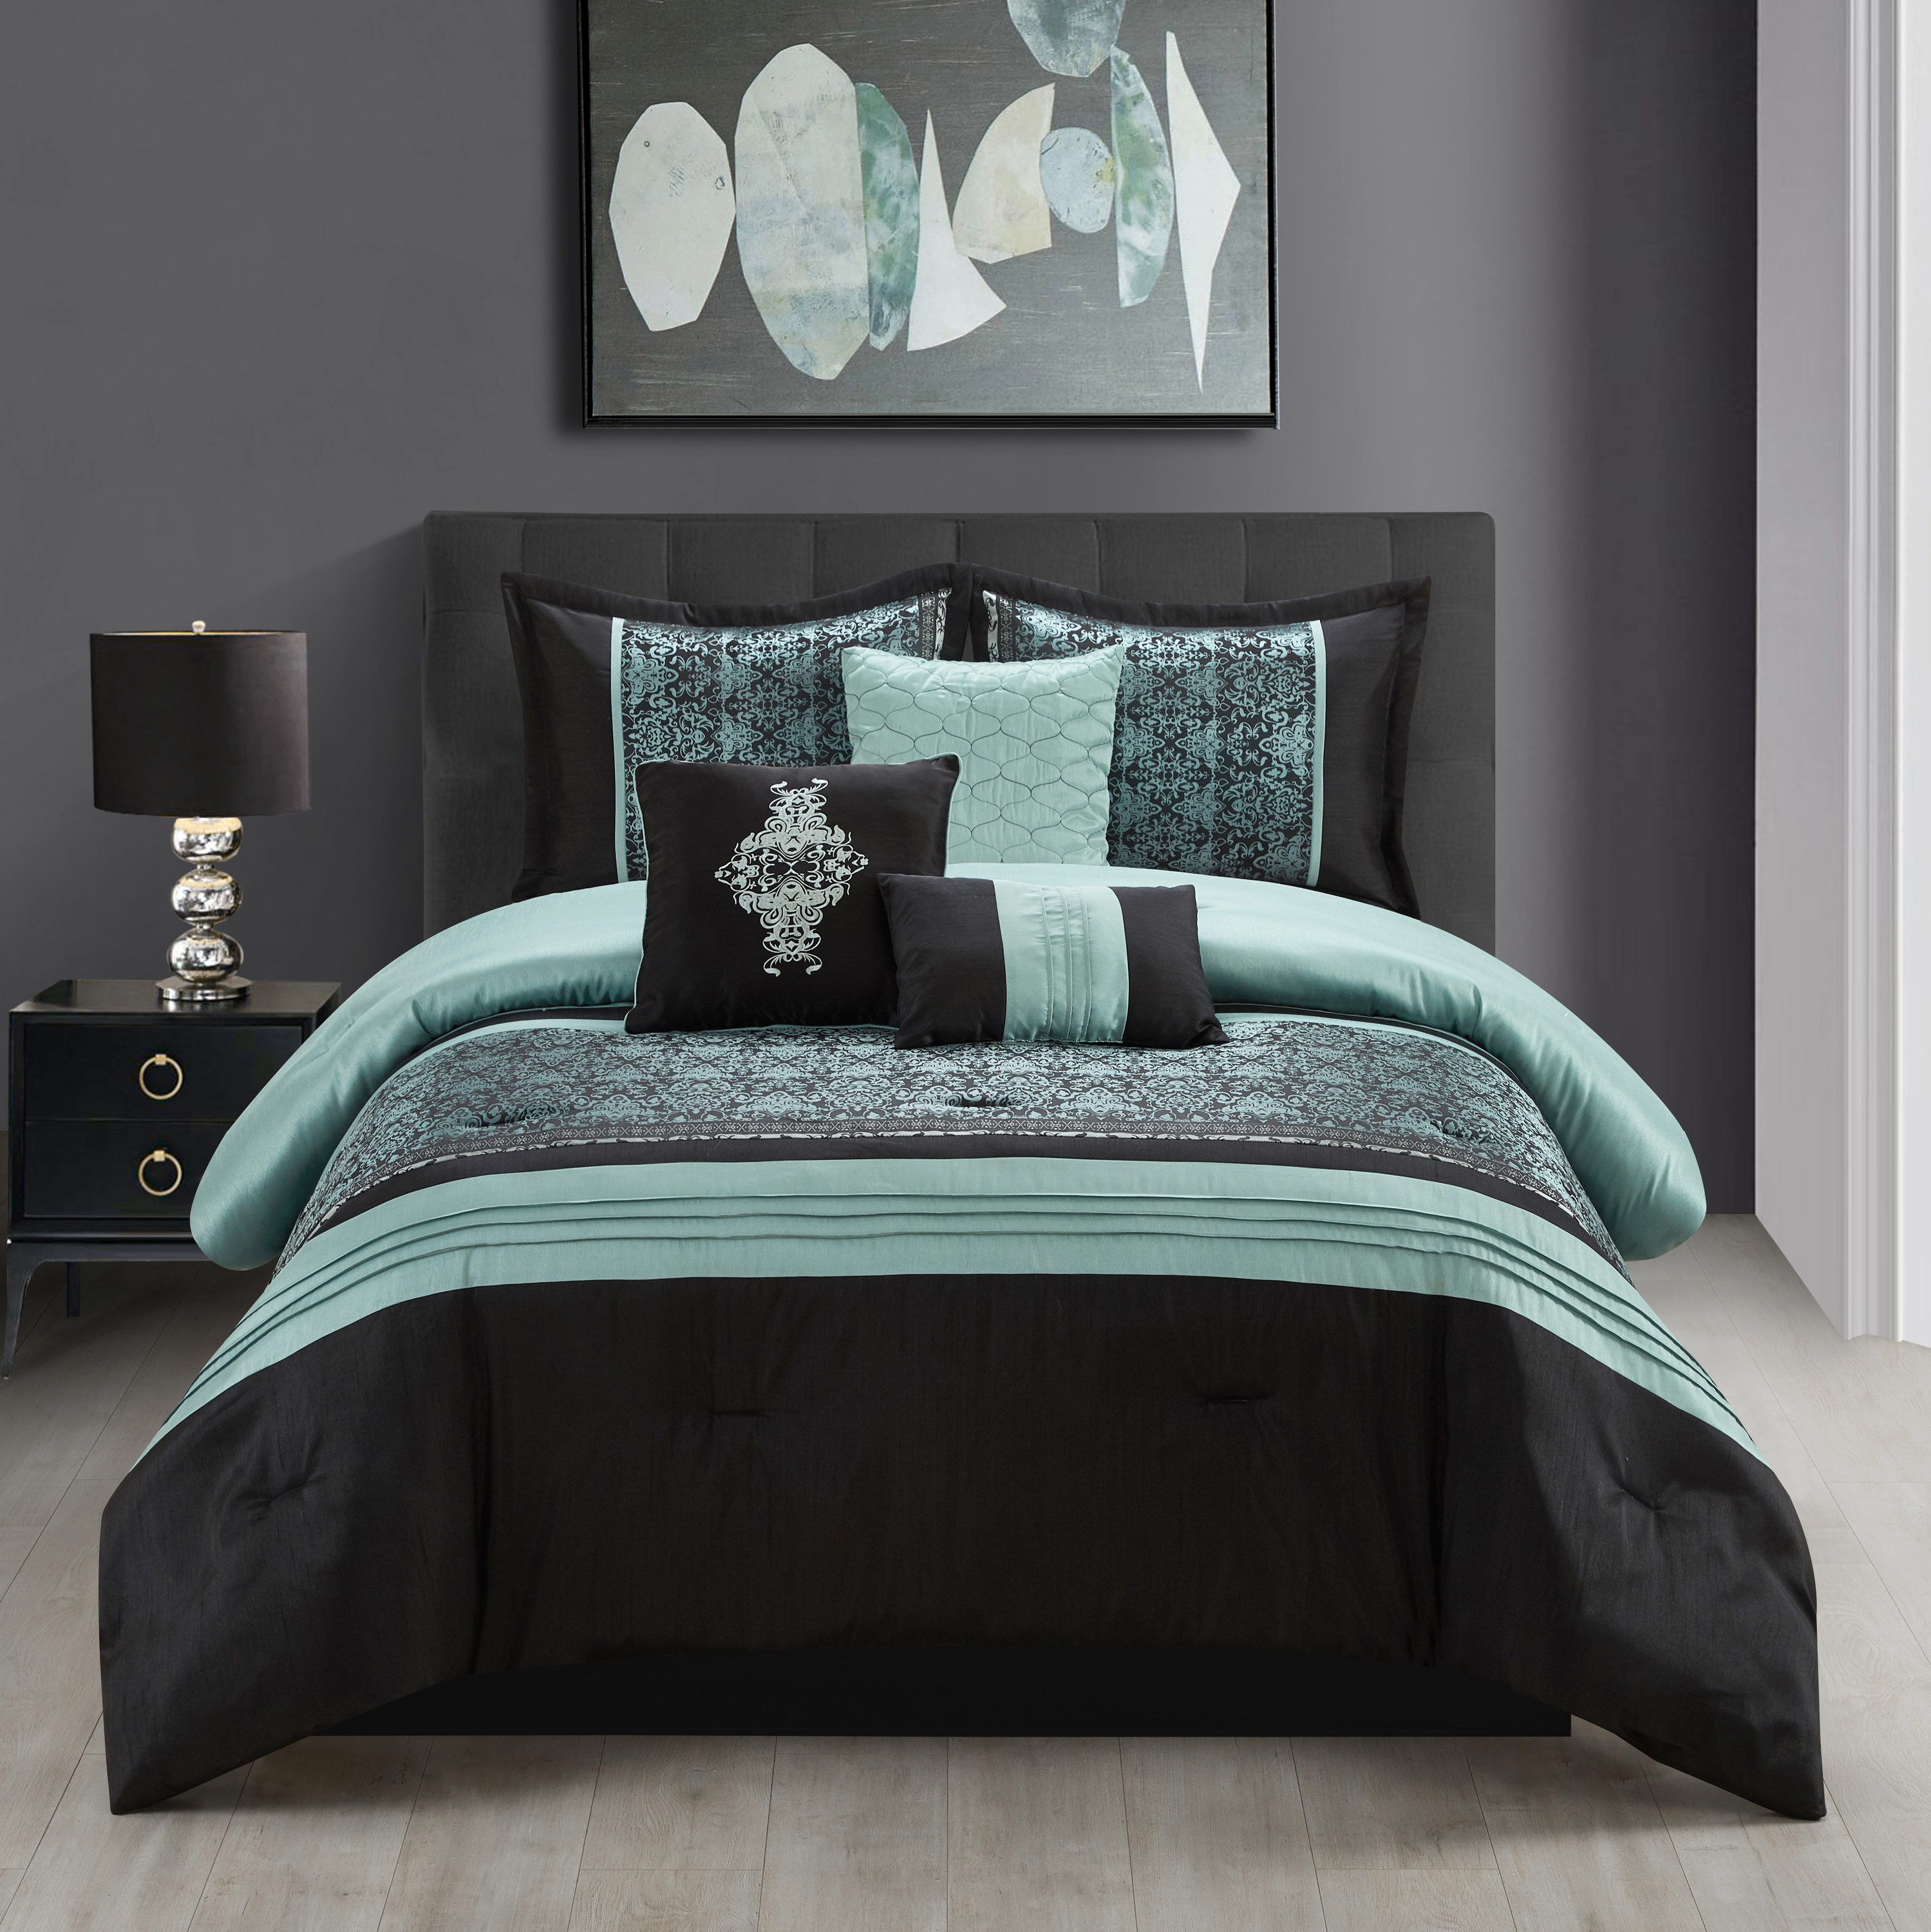 Grand Avenue 7-Piece Aqua/Black Queen Comforter Set in the Bedding